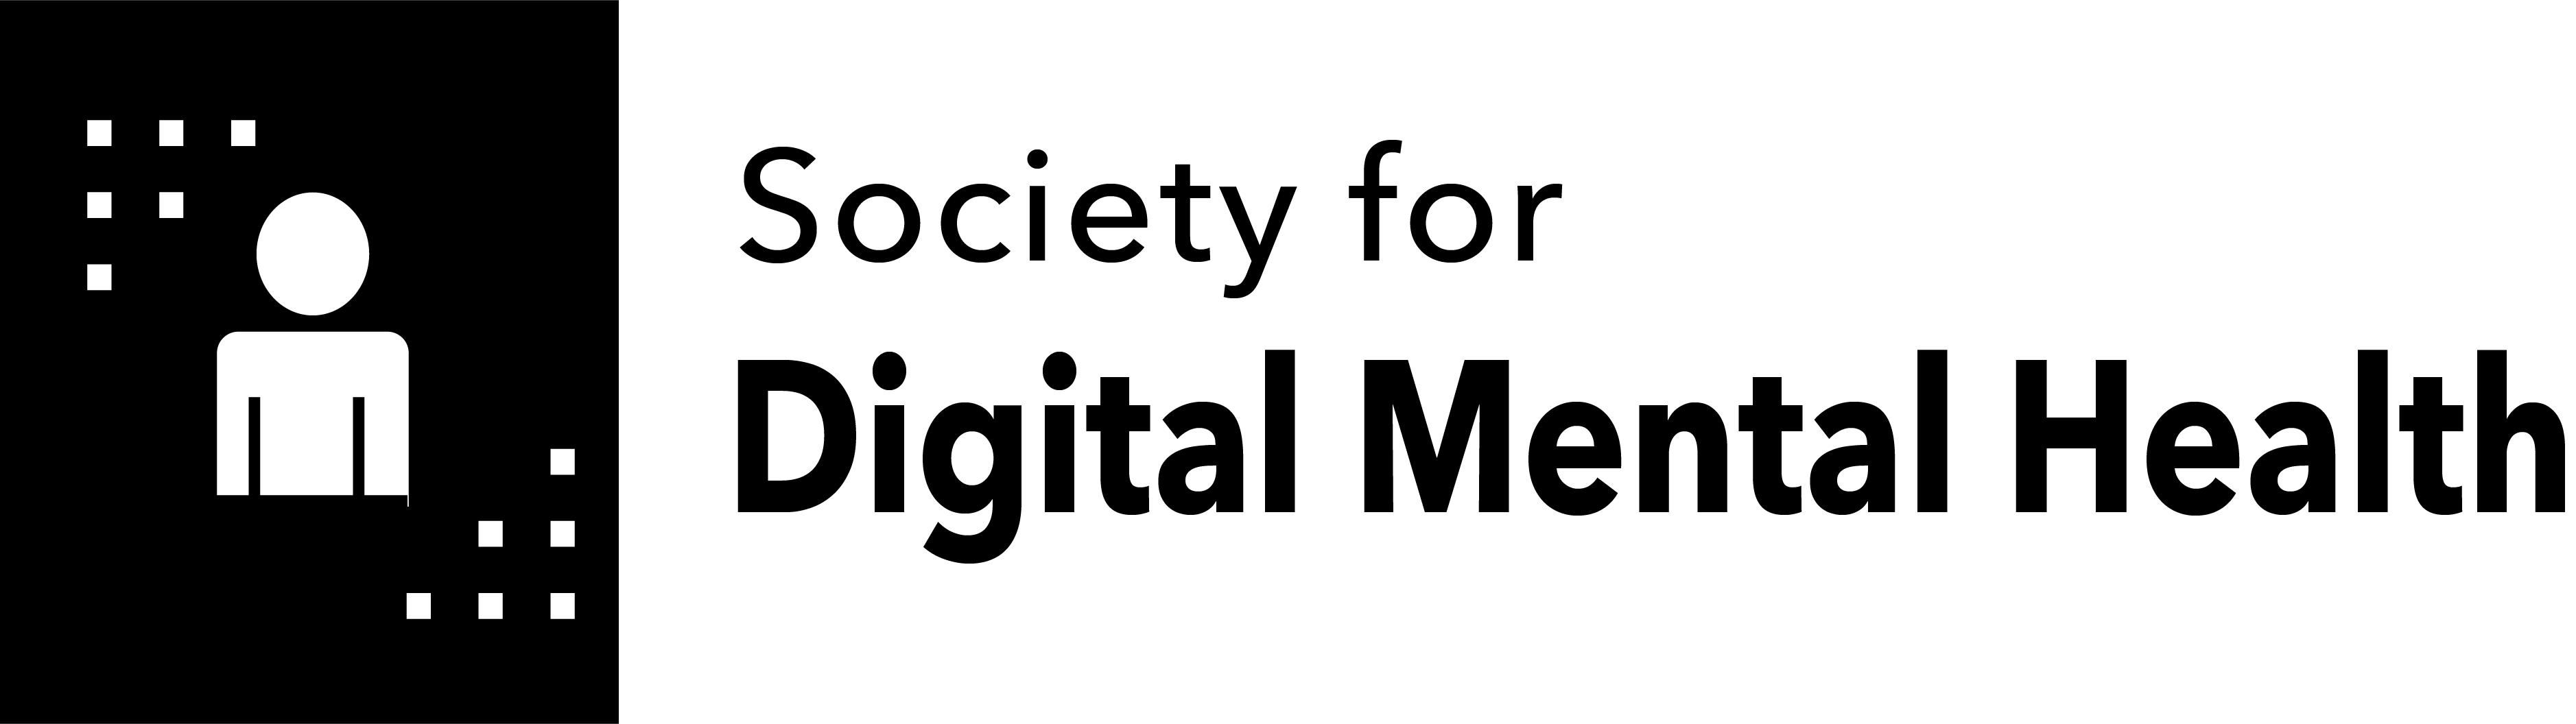 Society for Digital Mental Health Logo